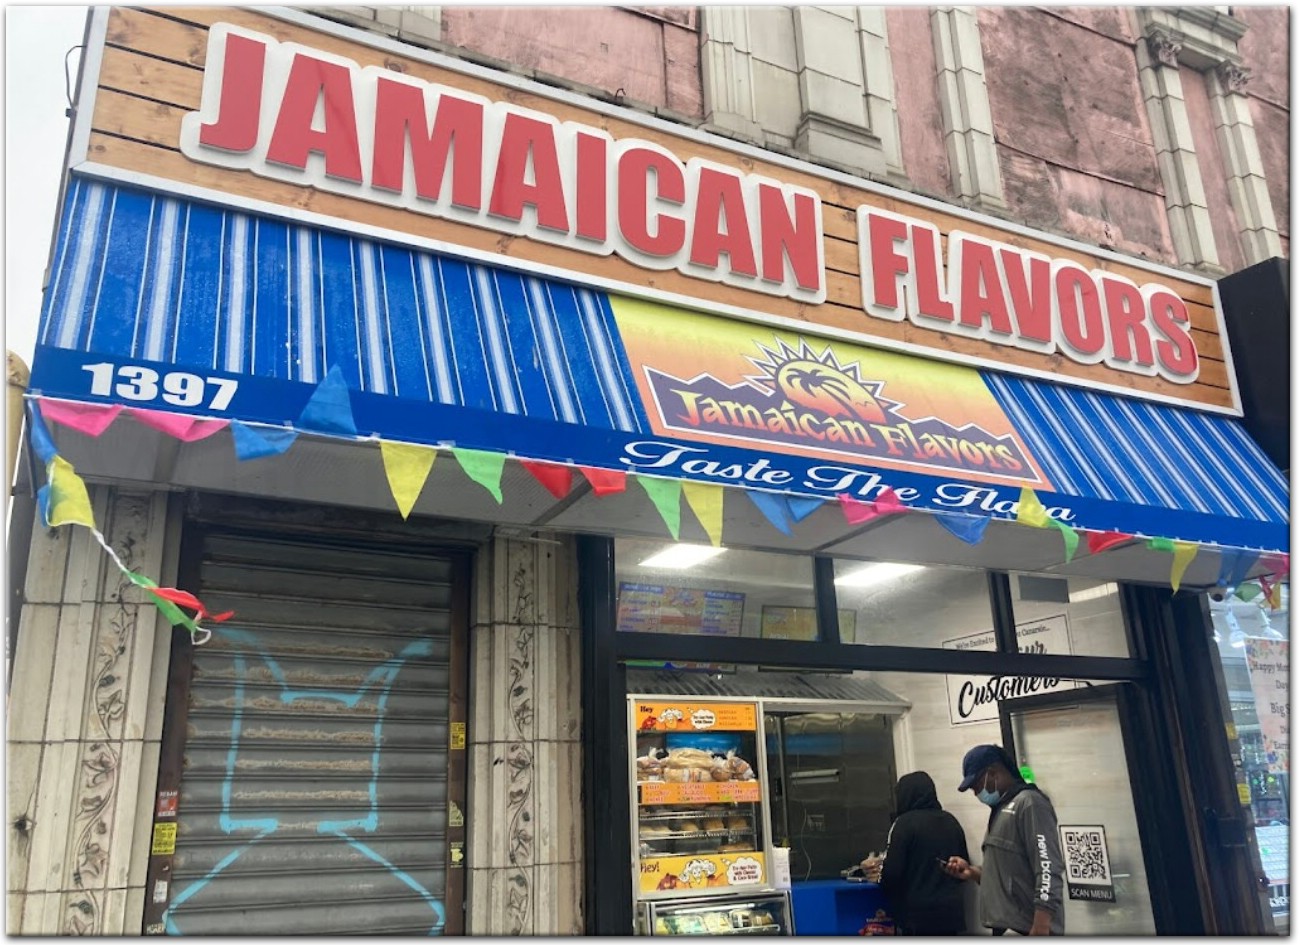 Jamaican Flavors